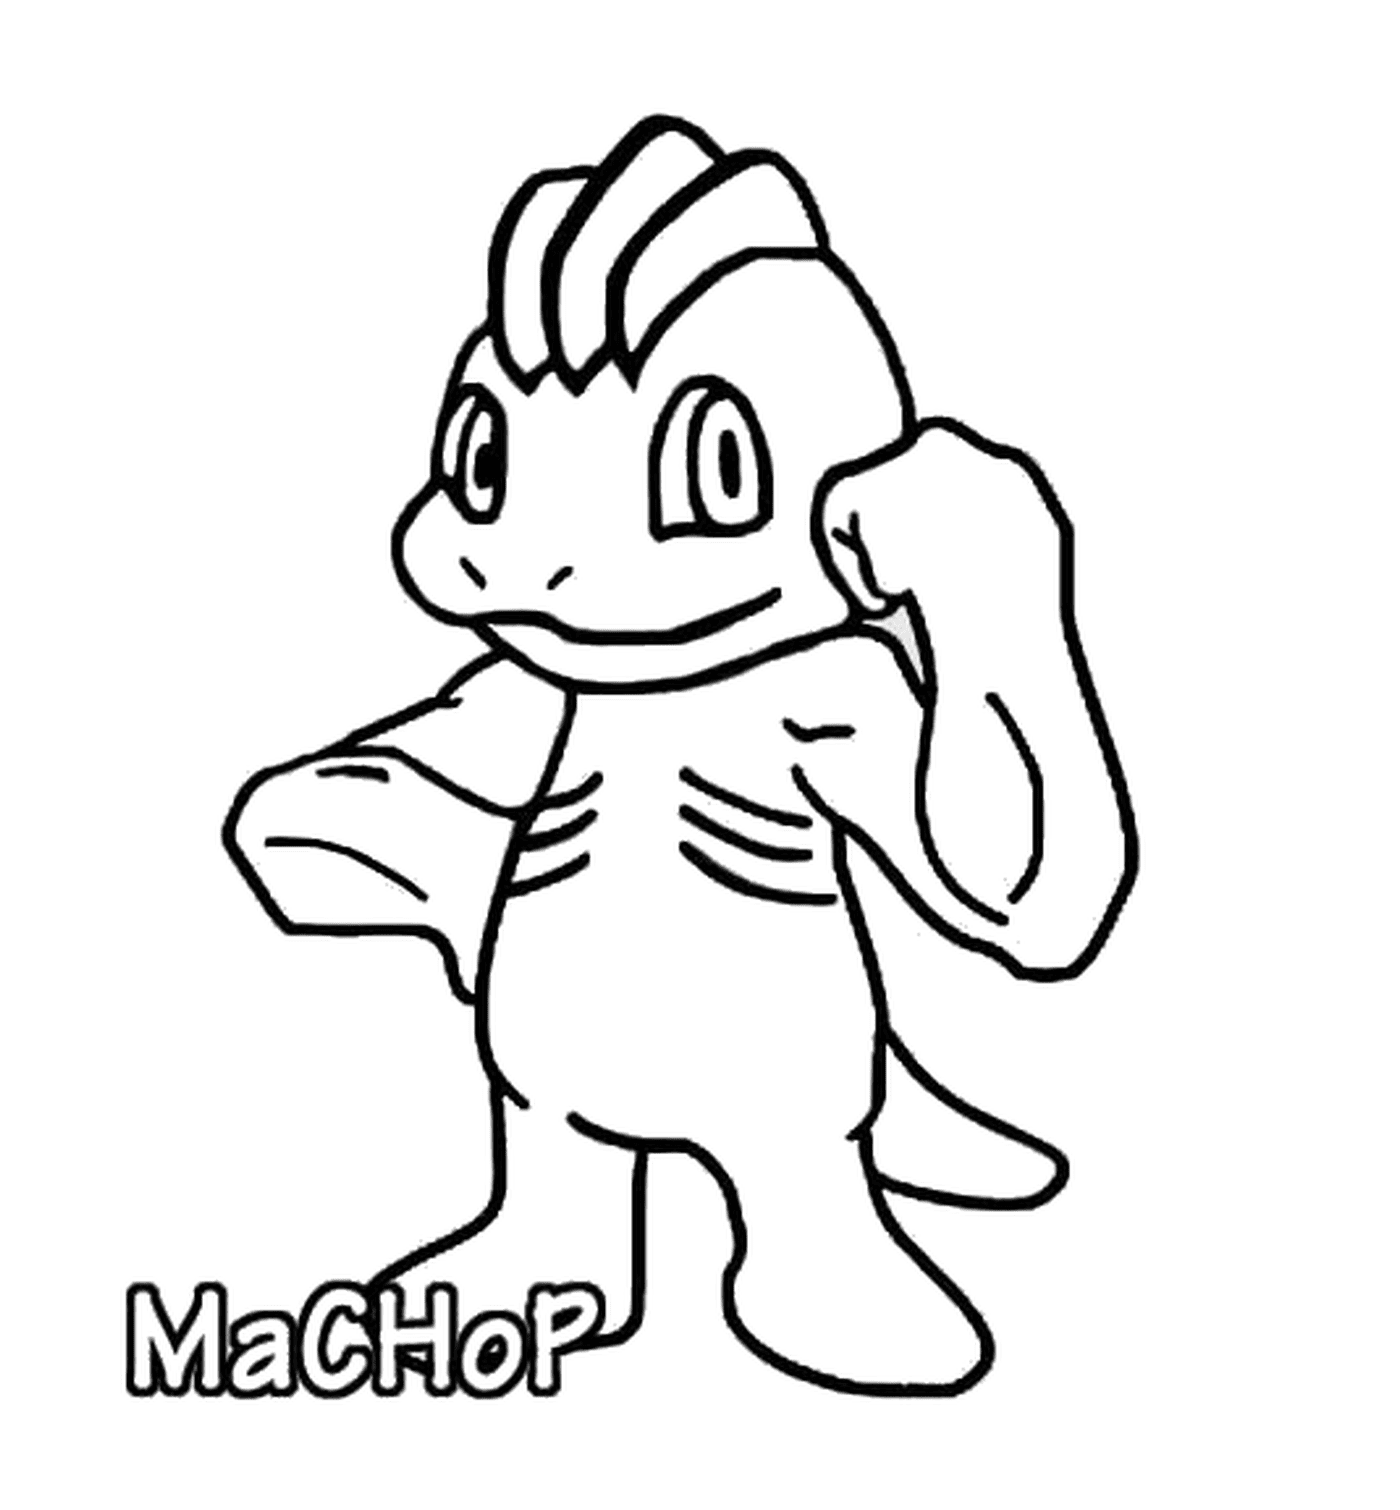 coloriage pokemon 066 Machop